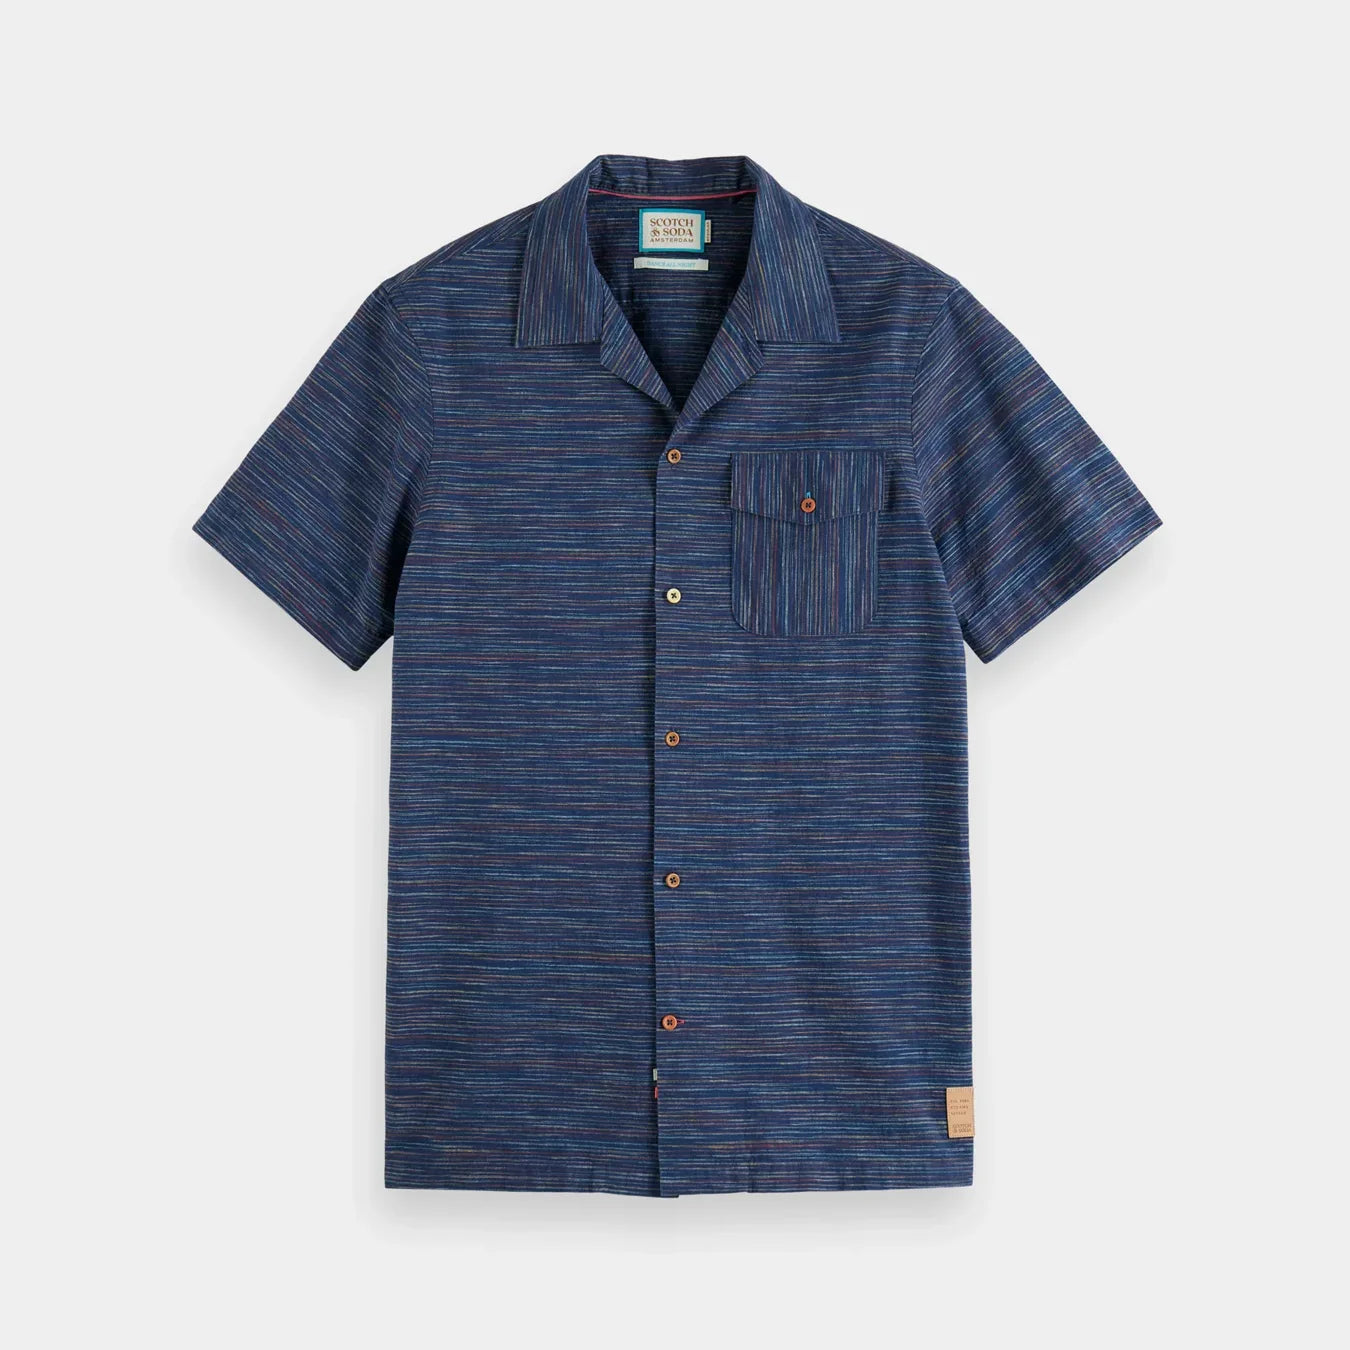 'Scotch & Soda Spaced-Out Horizontal Stripe Shirt' in 'Multi Blue Stripe' colour